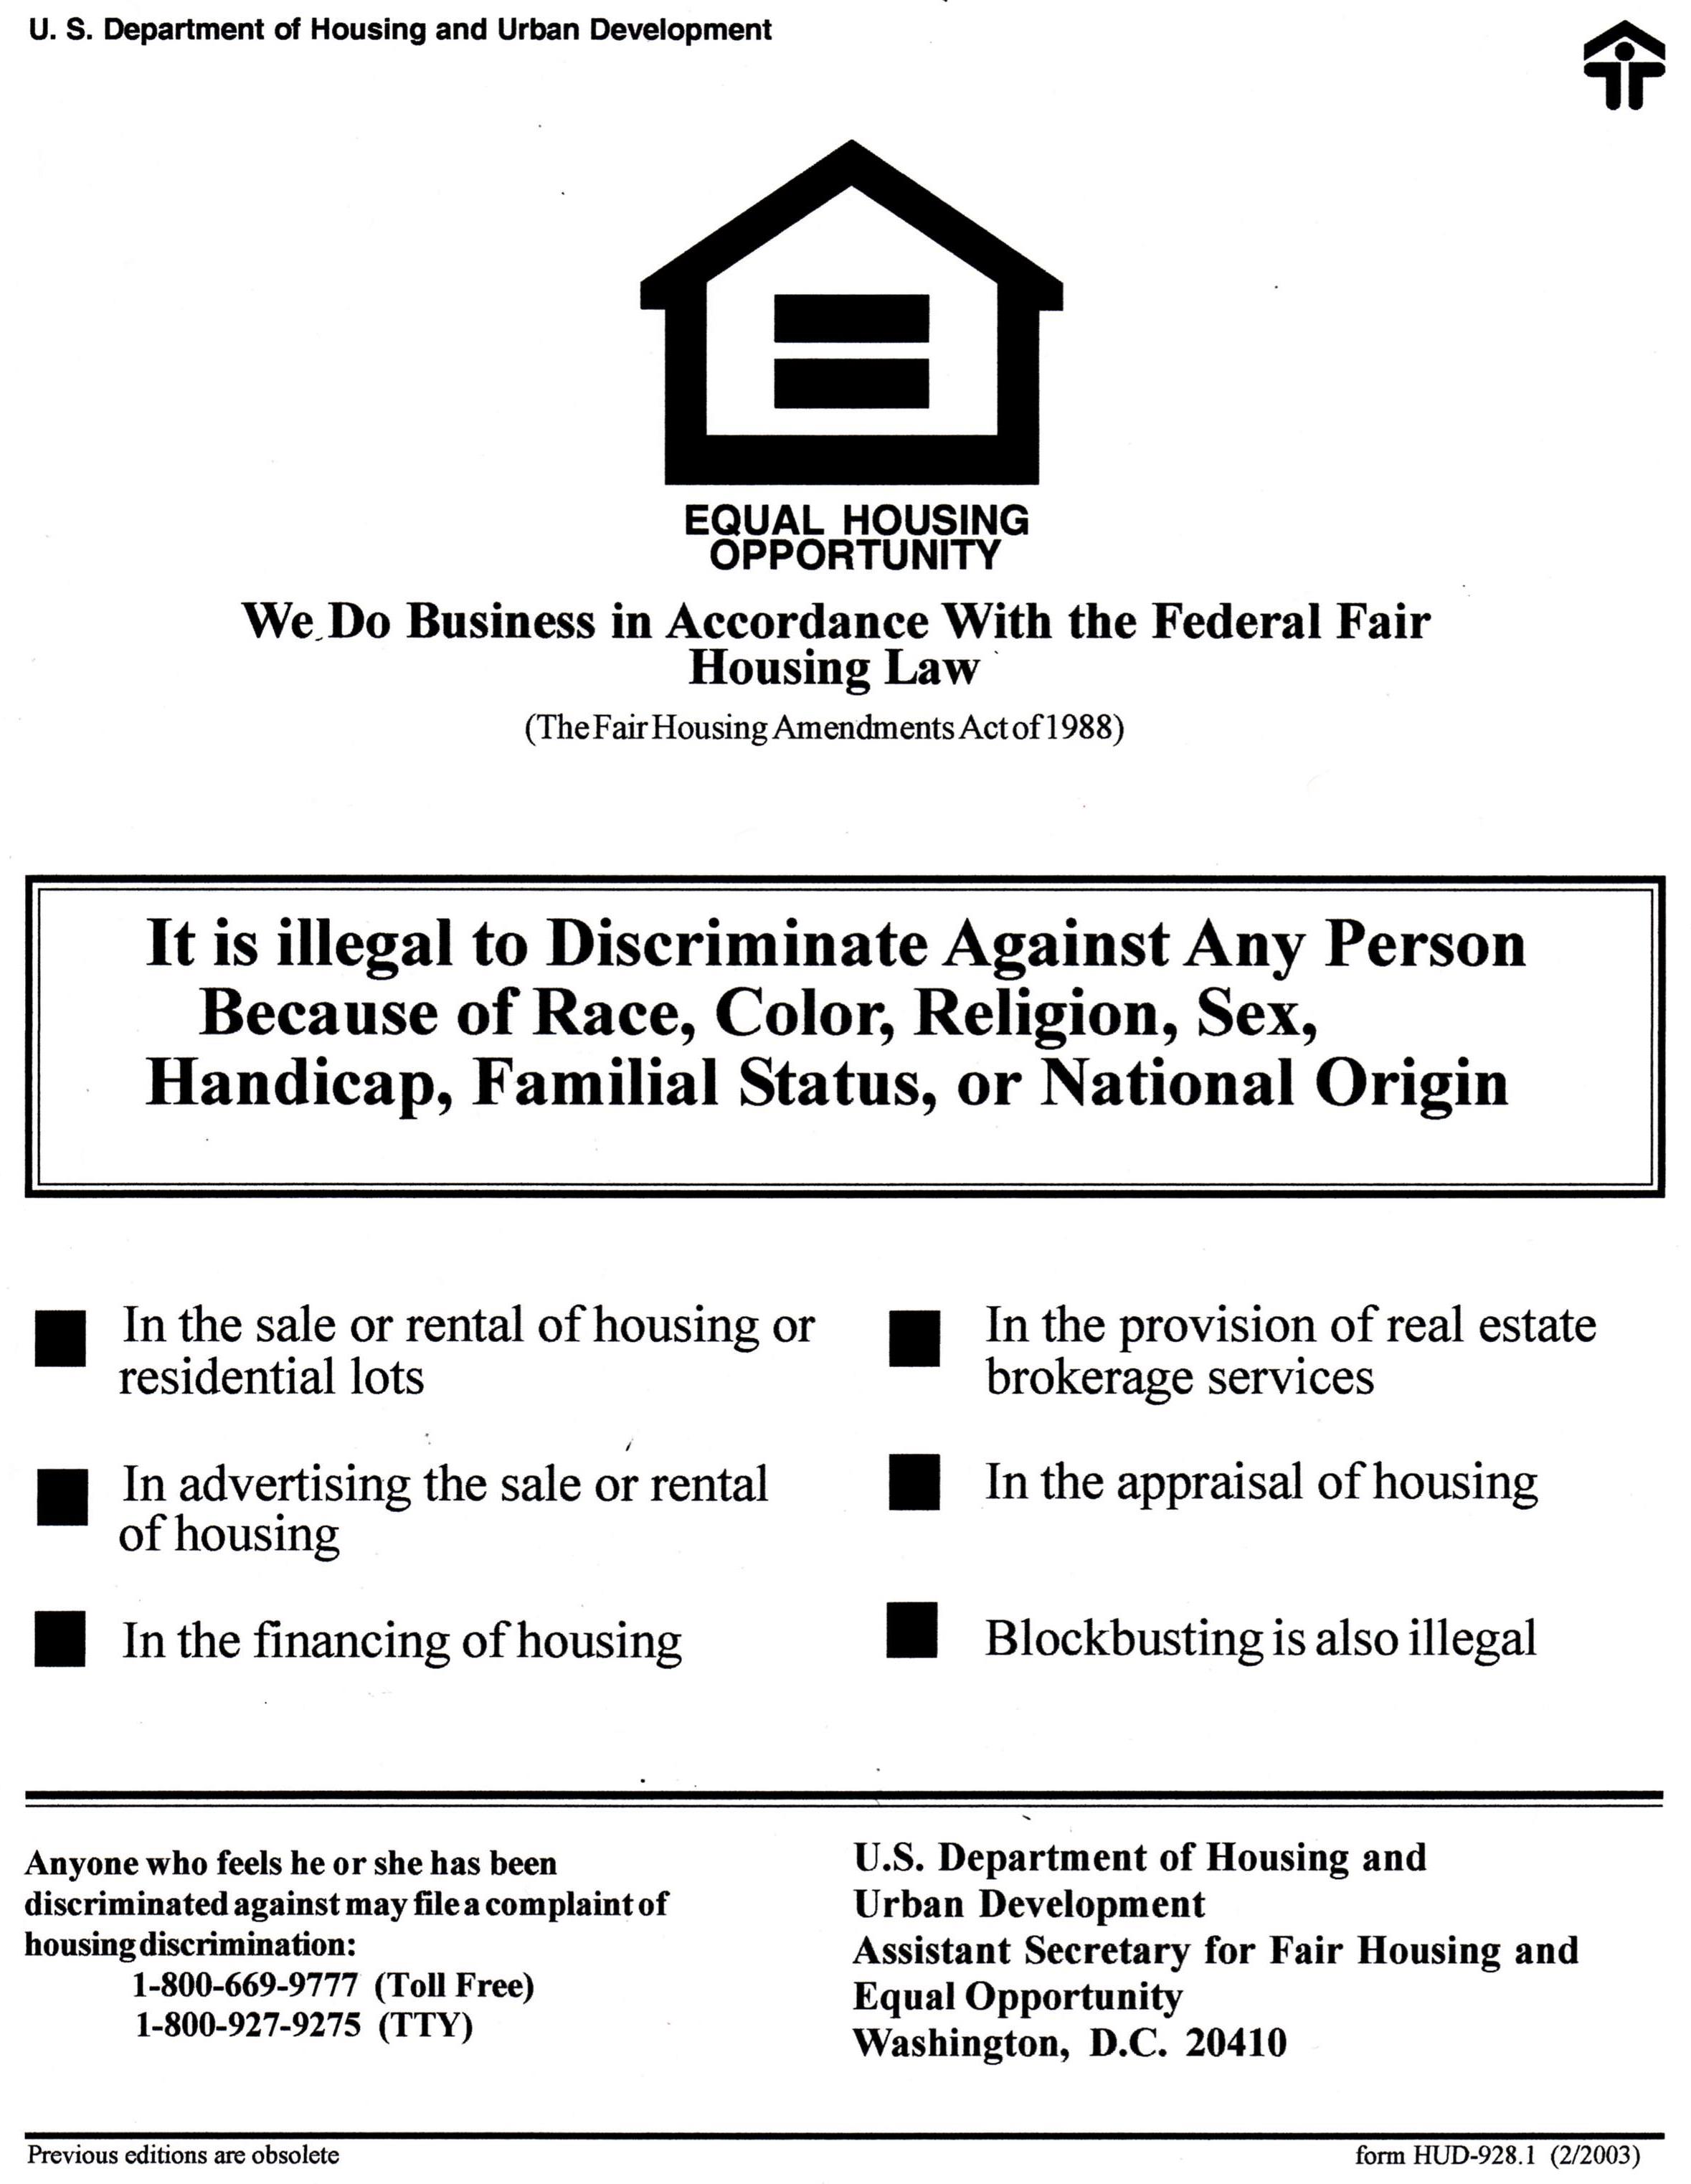 Equal (Fair) Housing Poster